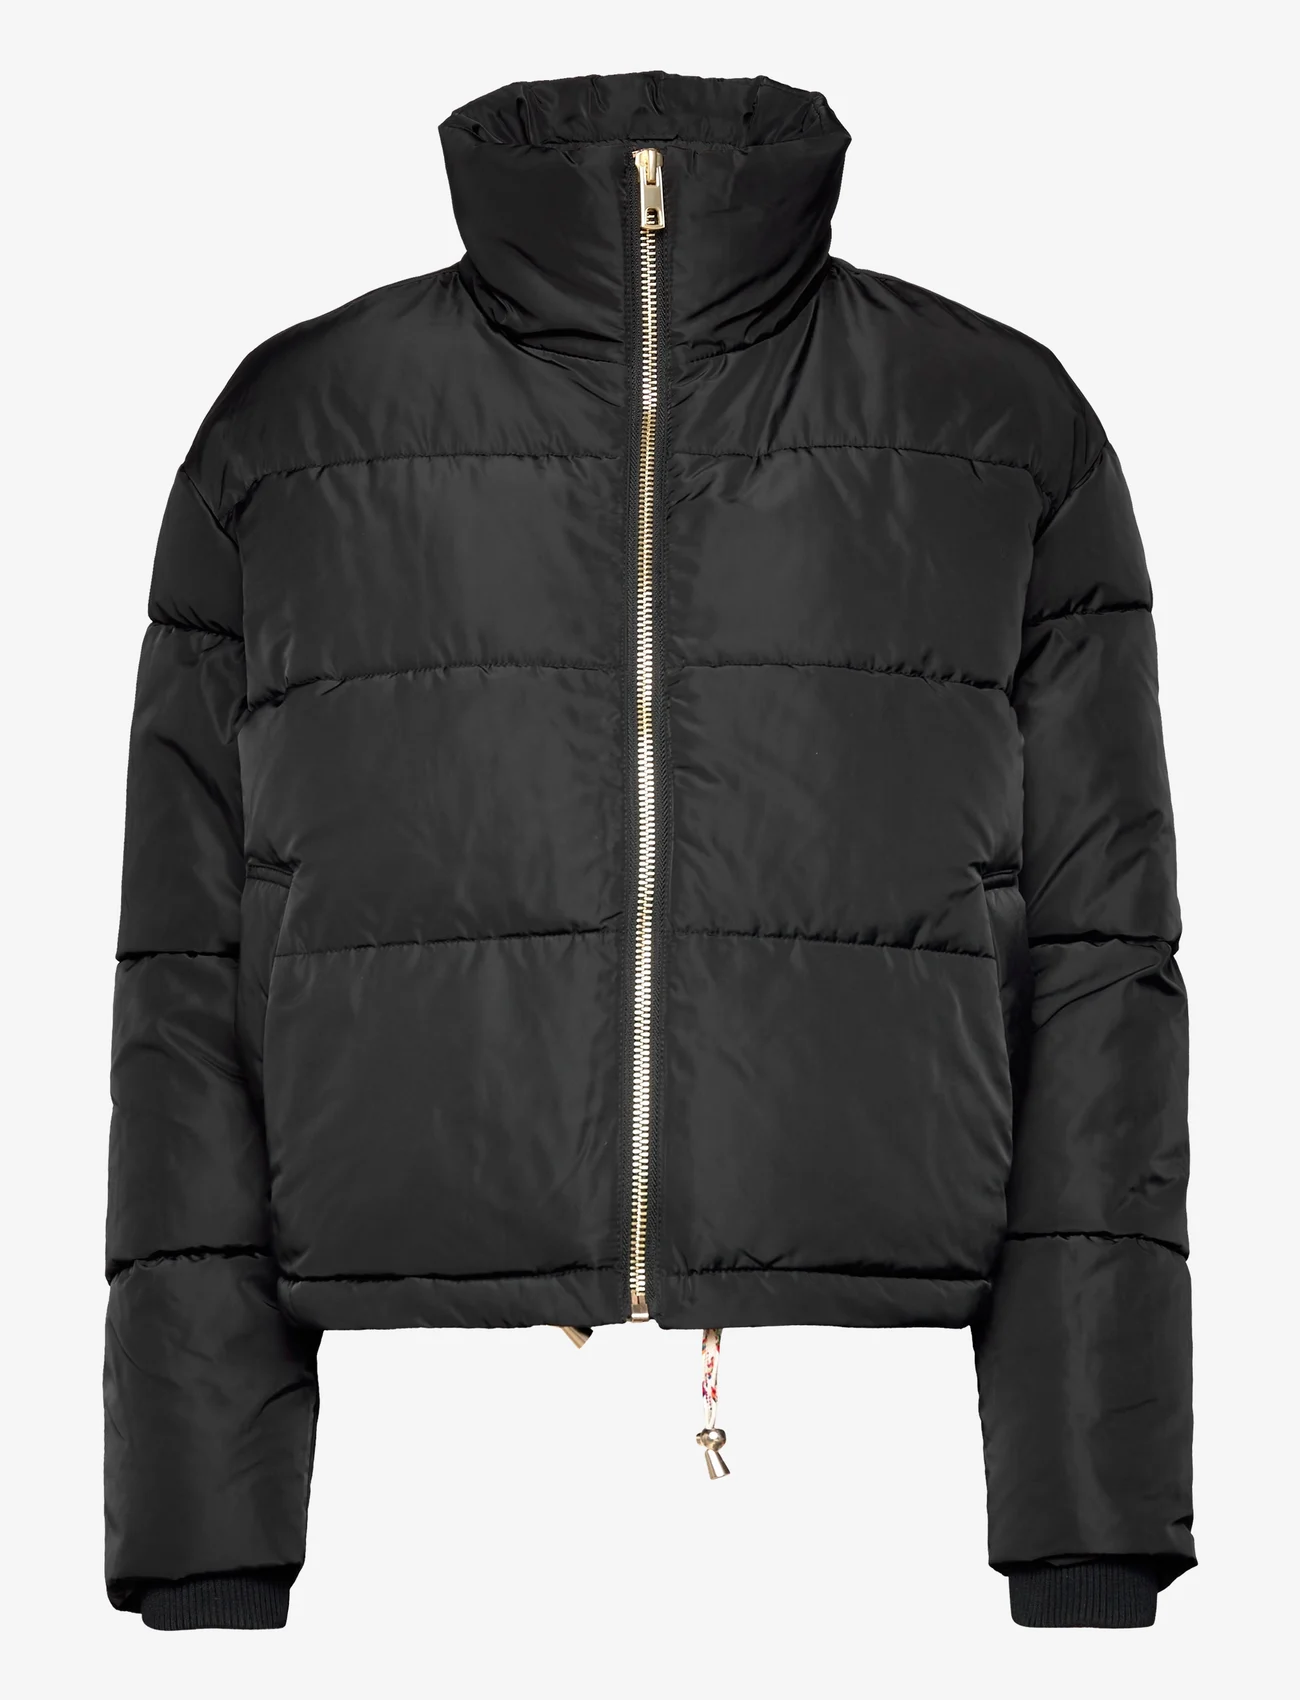 Coster Copenhagen - Short puffer jacket - winter jackets - black - 0